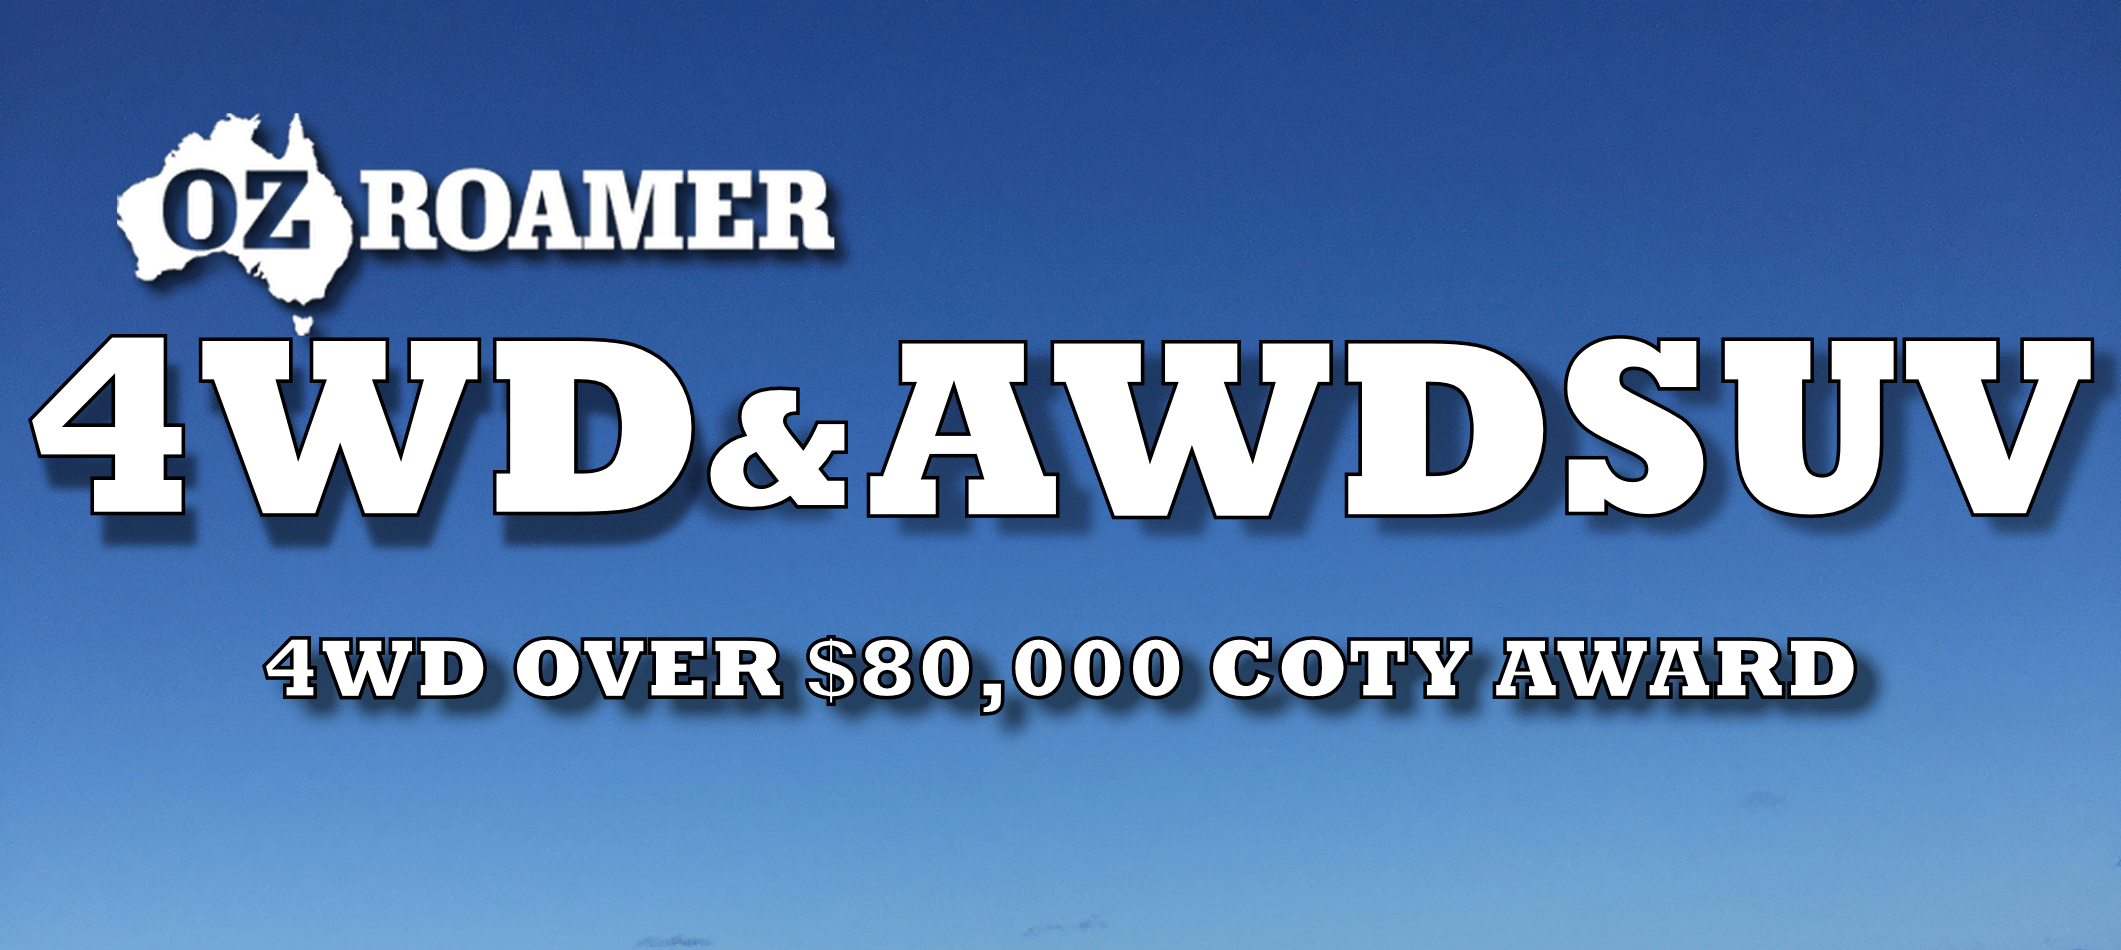 OzRoamer 2022 4WD OVER $80,000 COTY Award